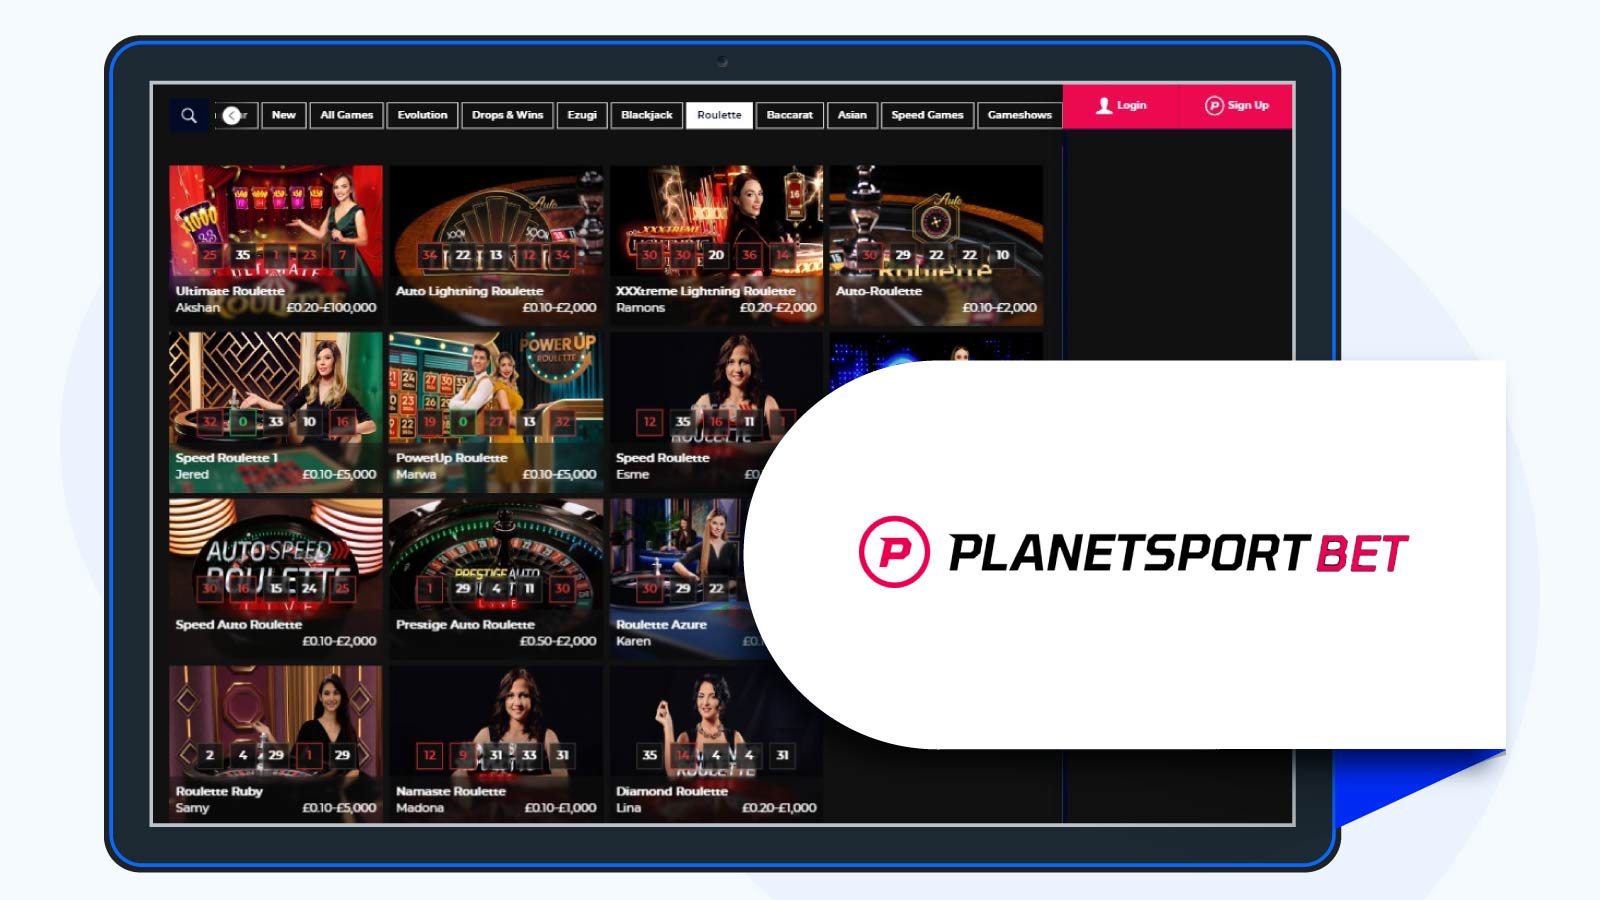 Planet-sport-bet-Casino Live-Online-Roulette-Bonuses